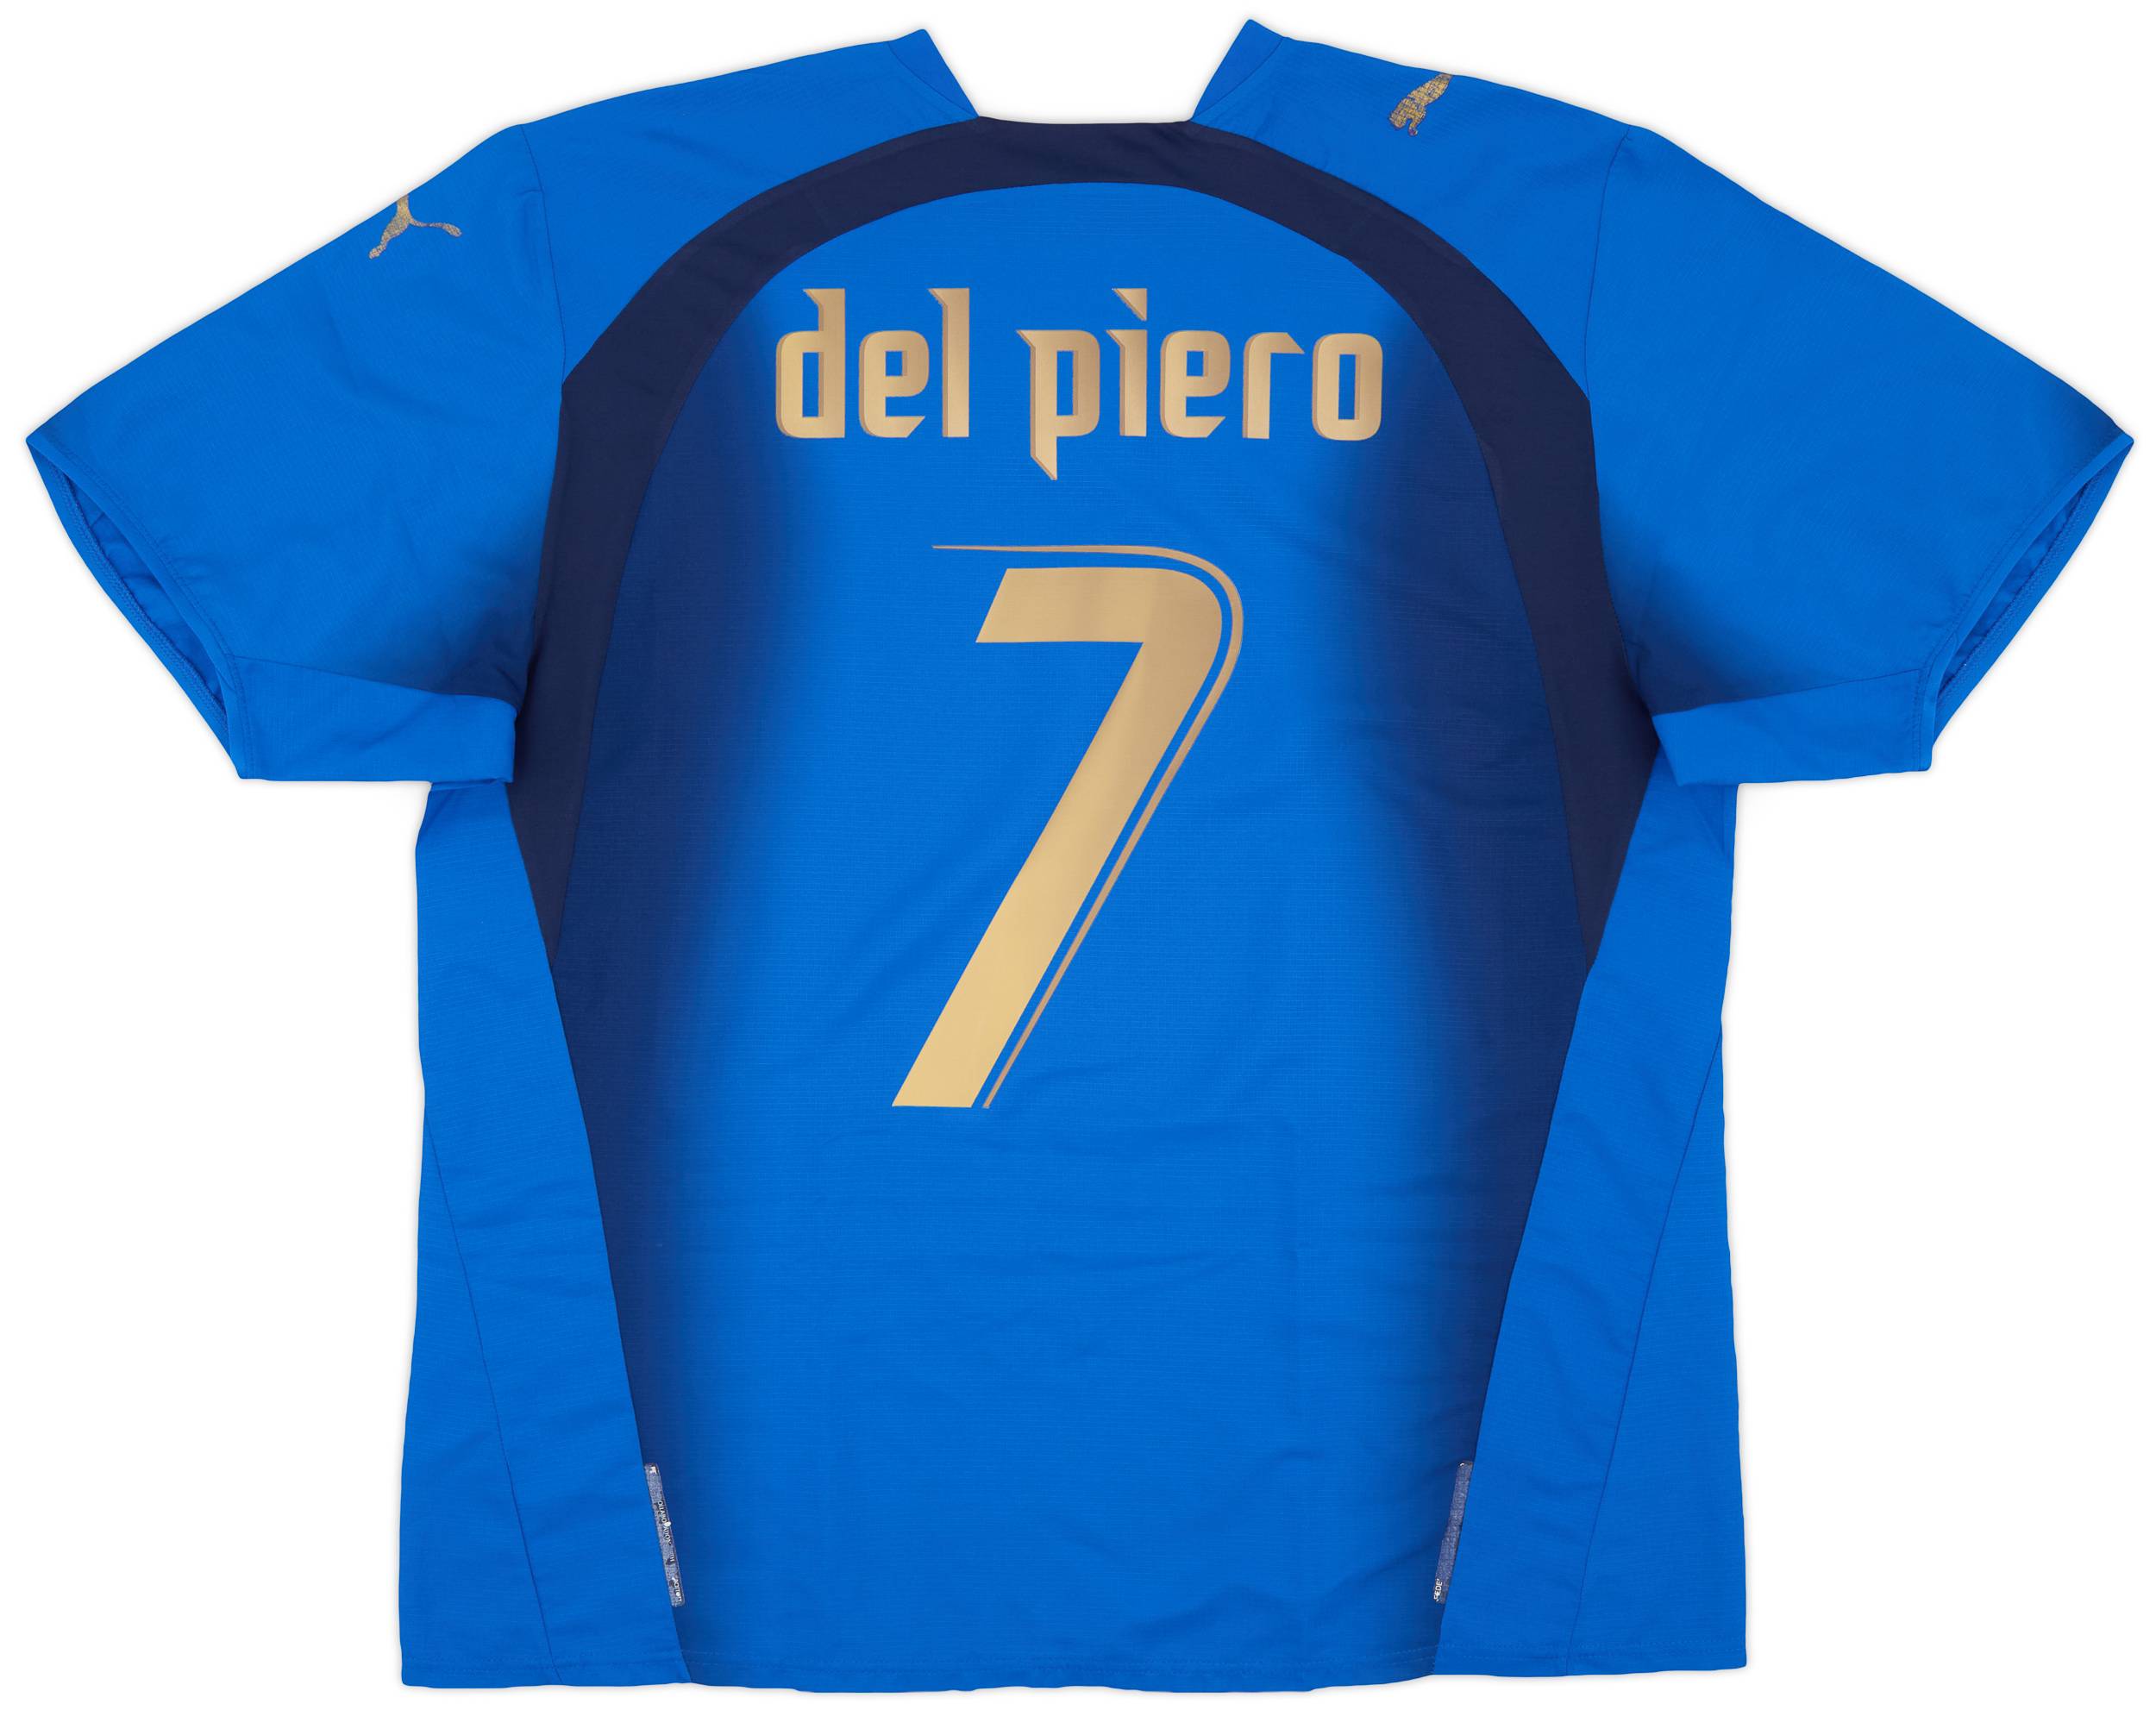 2006 Italy Home Shirt Del Piero #7 - 6/10 - (XL)